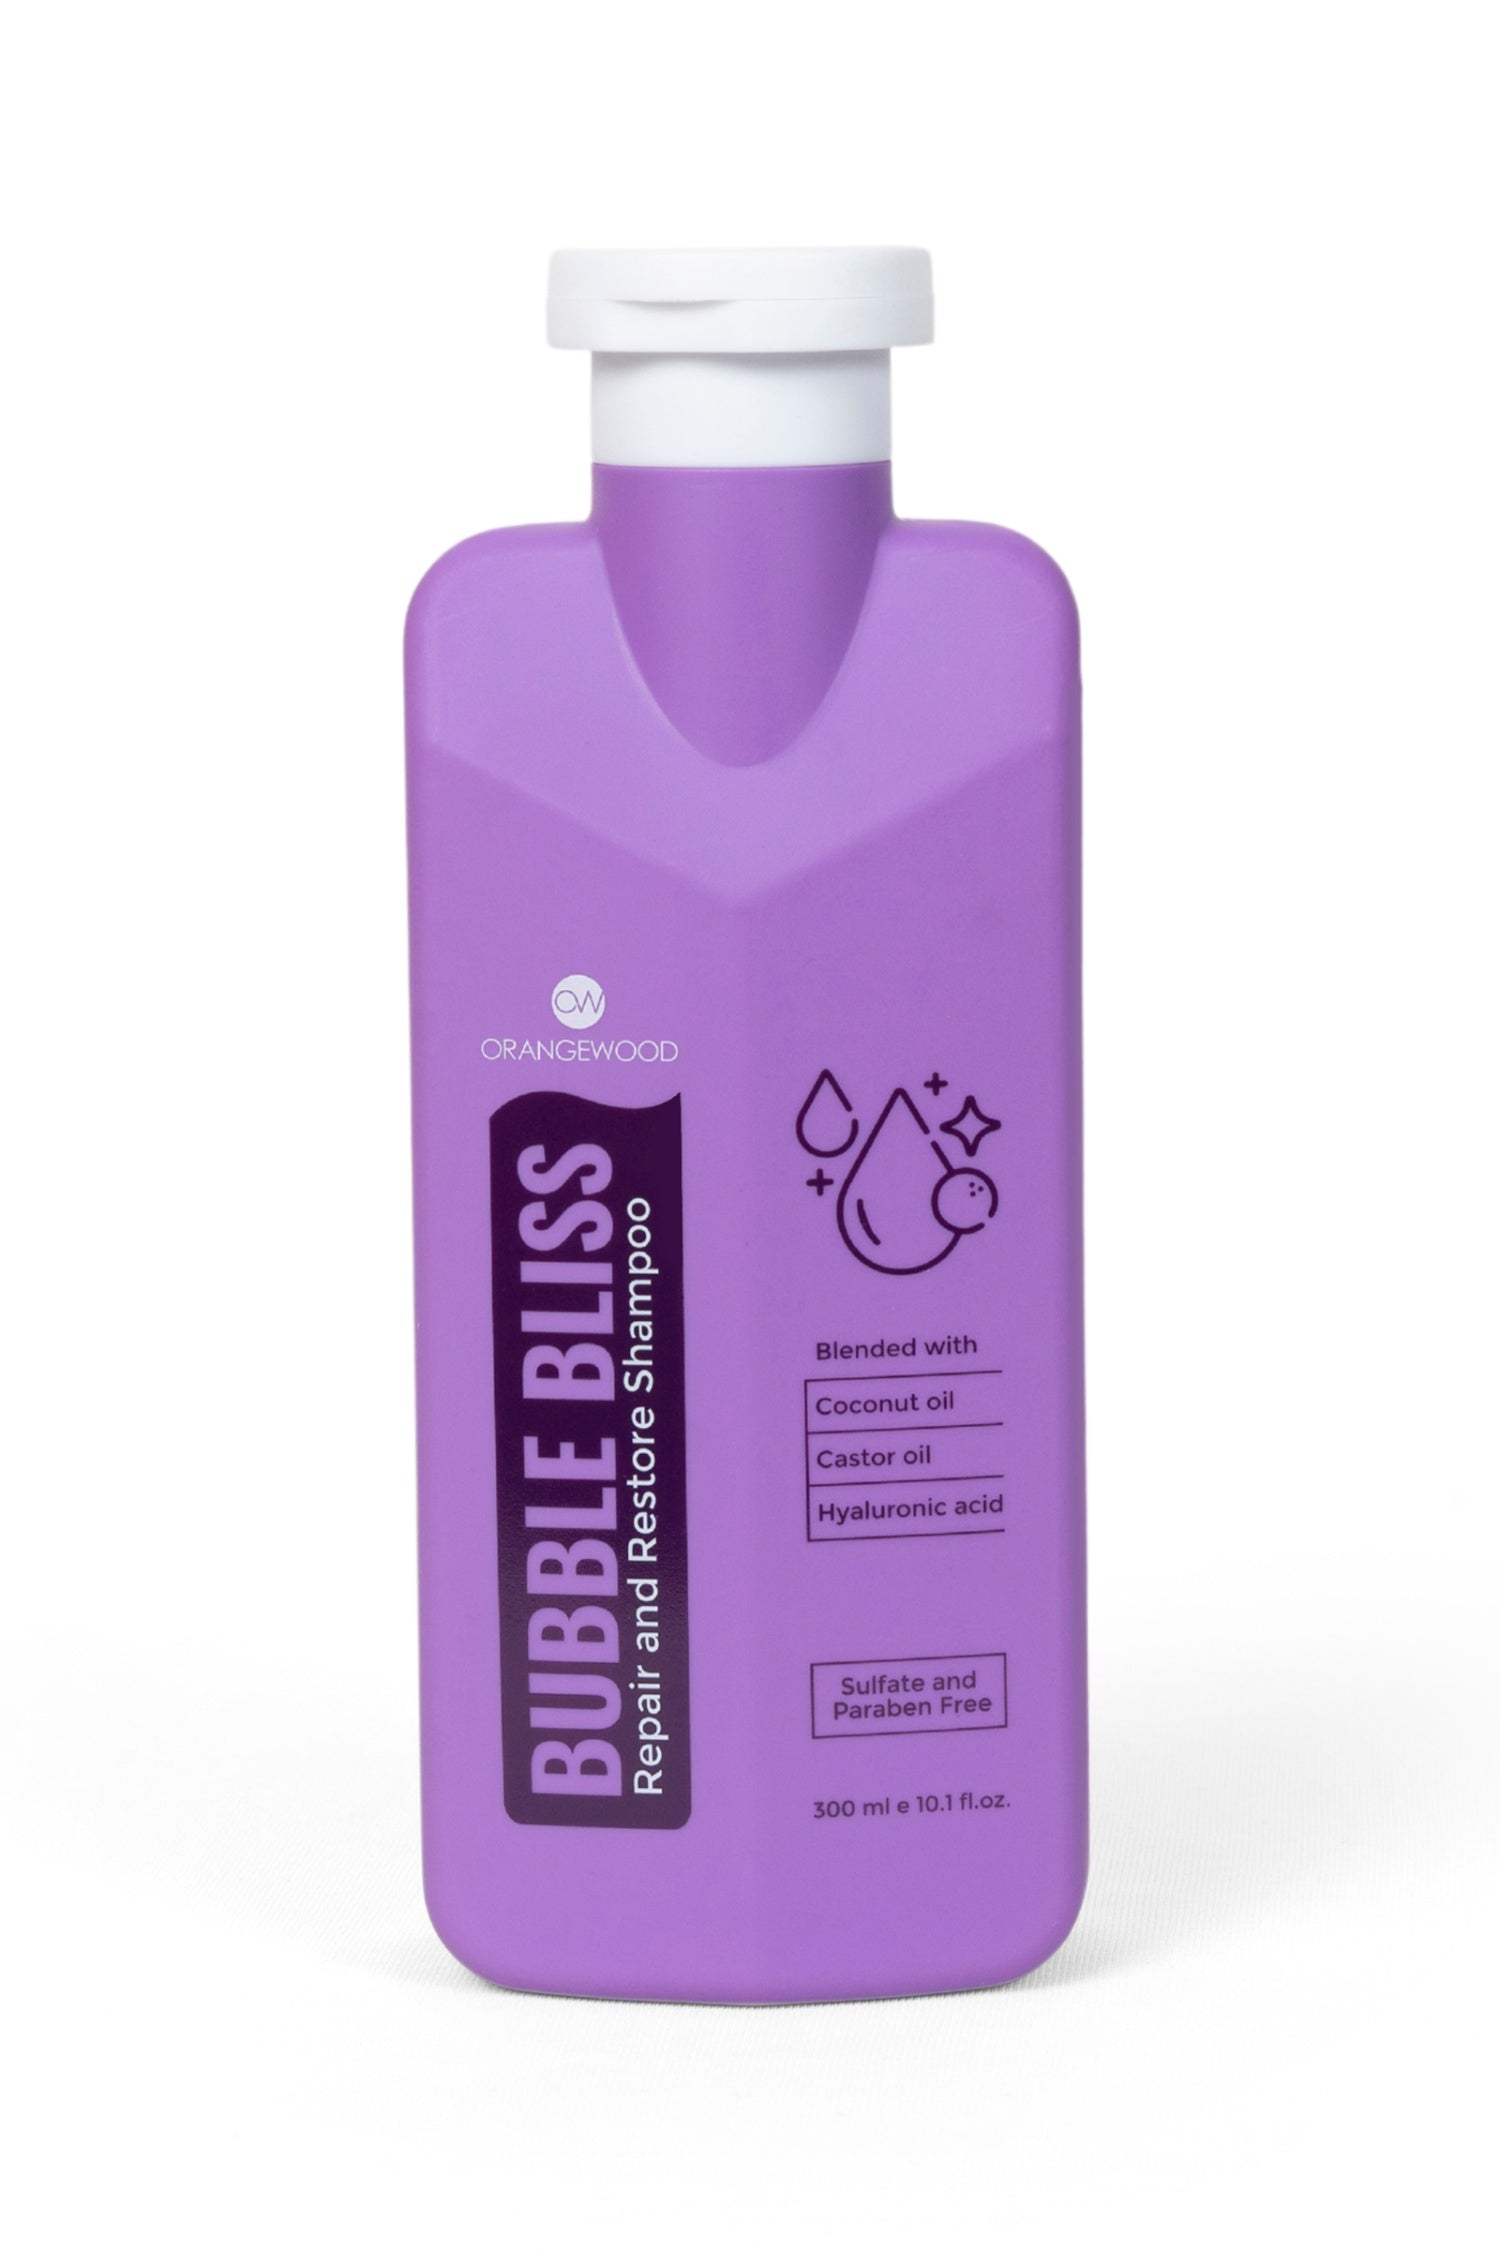 Orangewood Bubble Bliss Repair and Restore Shampoo - 300ml